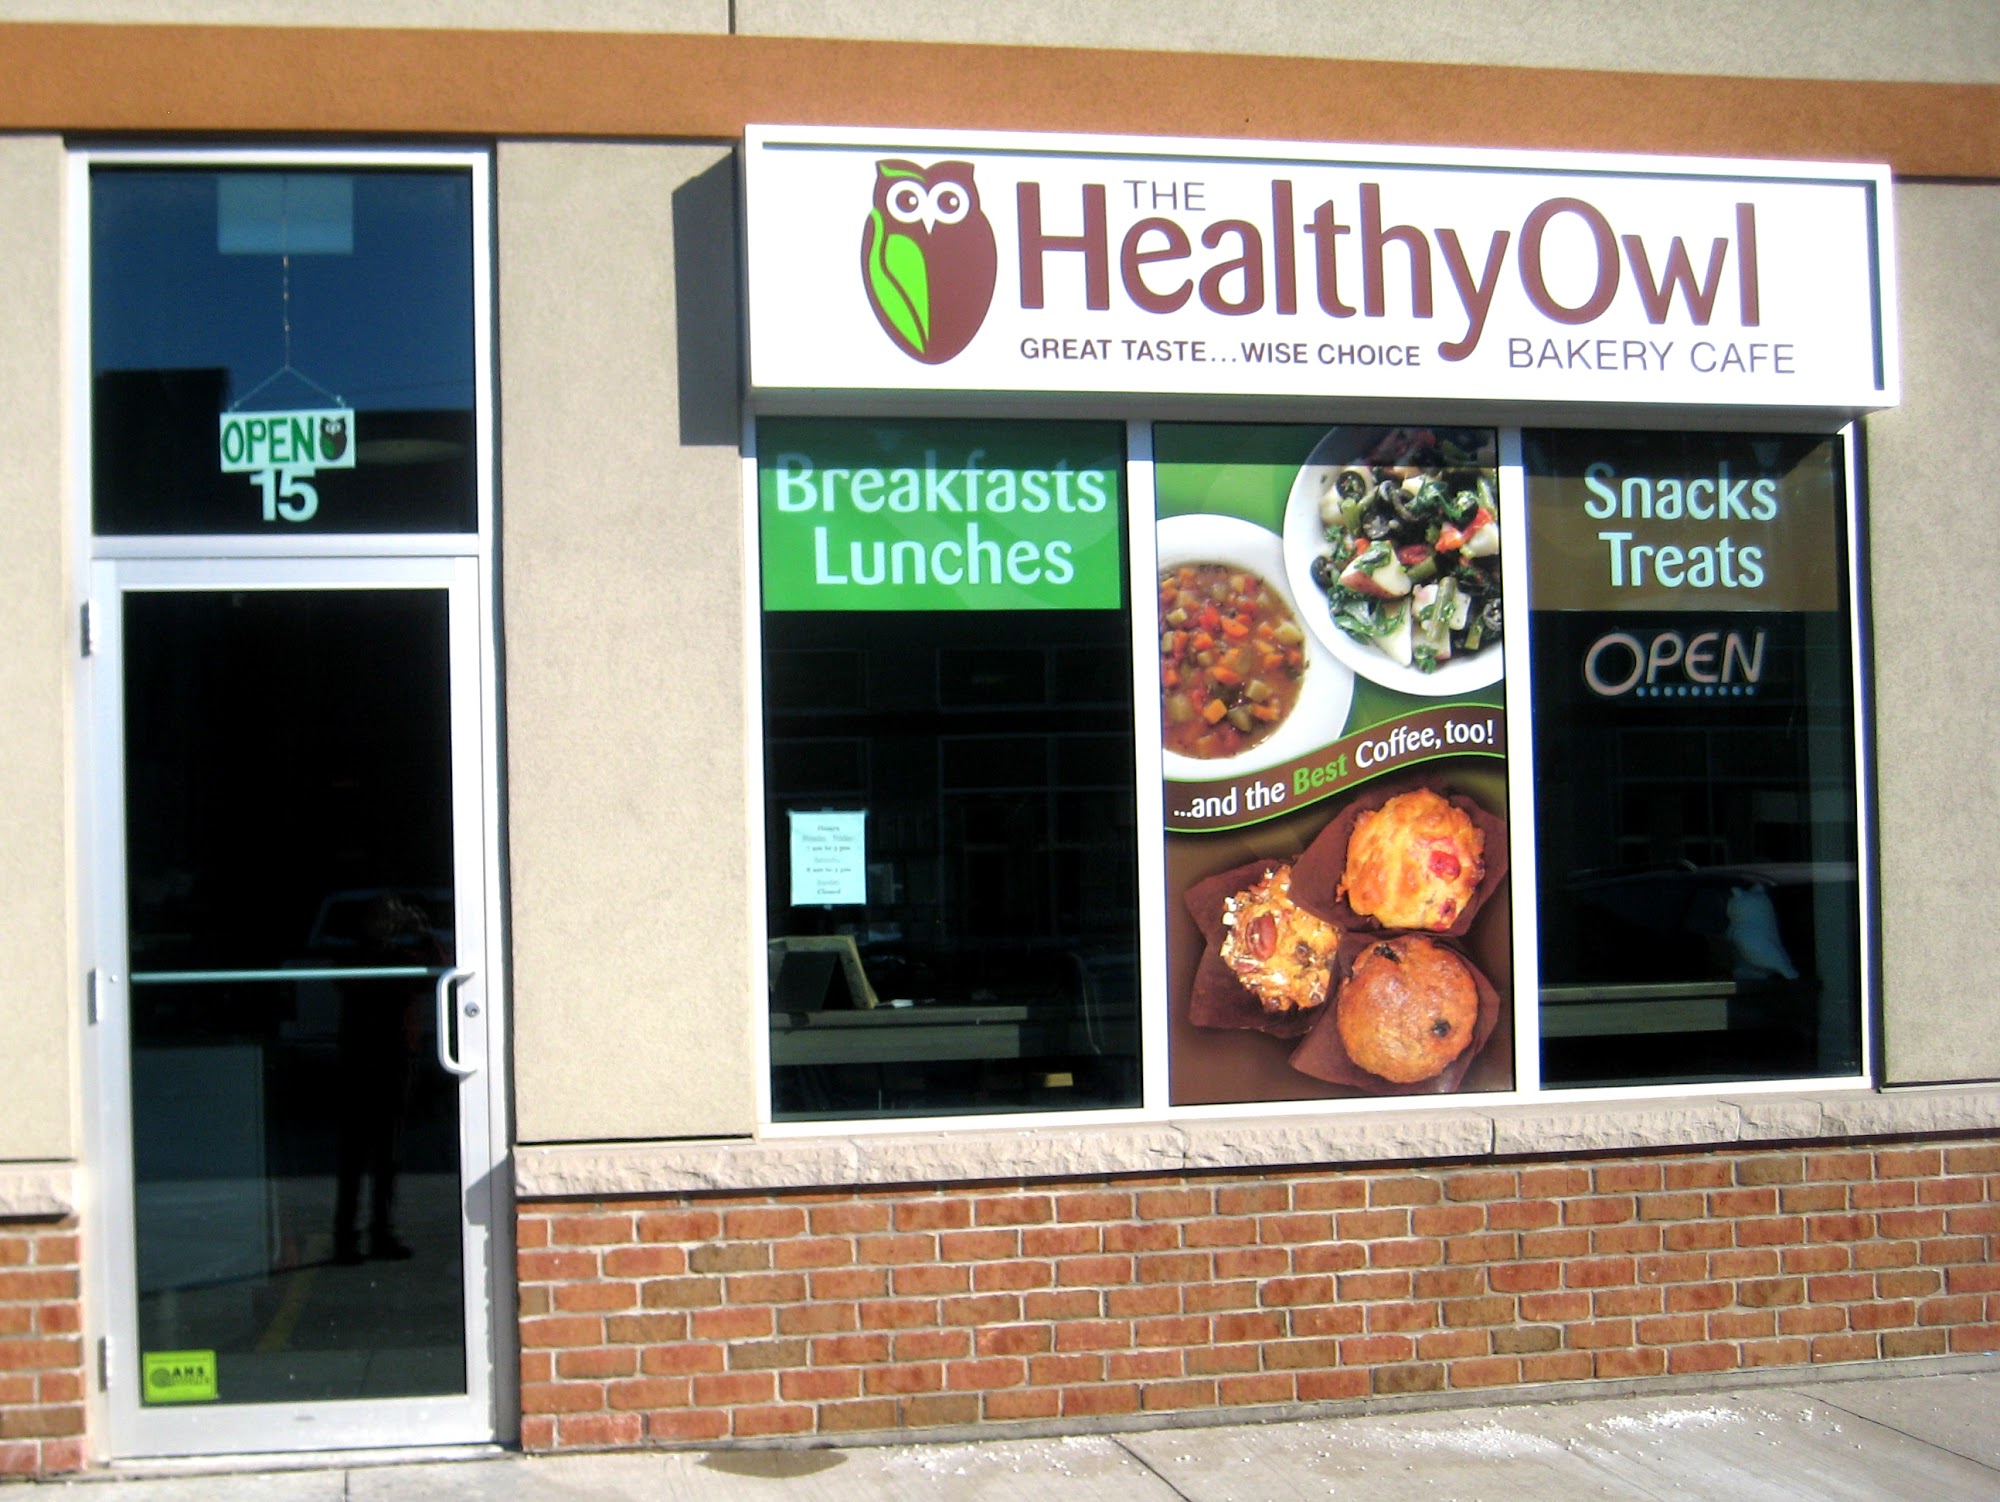 The Healthy Owl Bakery Cafe